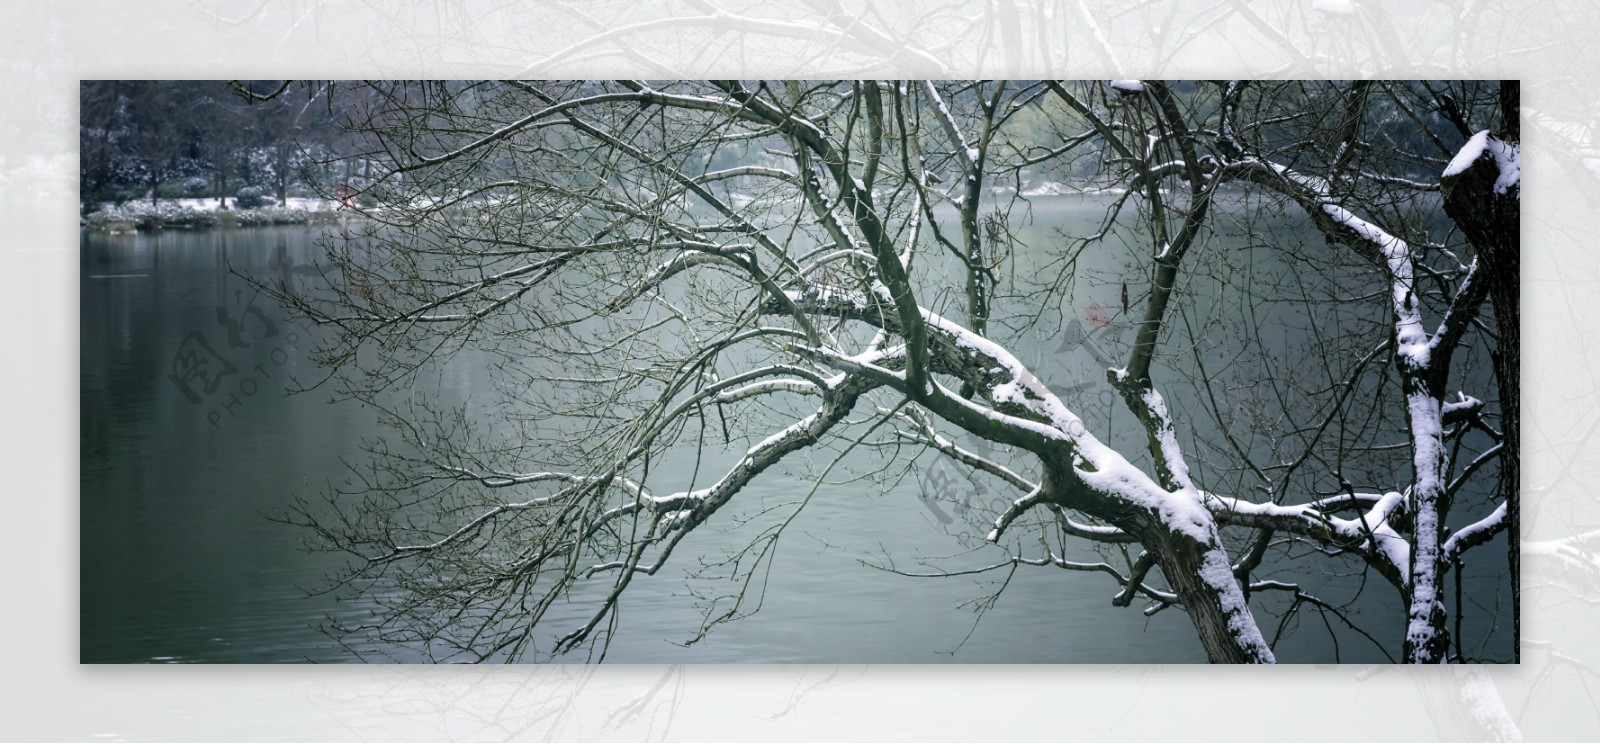 雪压湖畔树